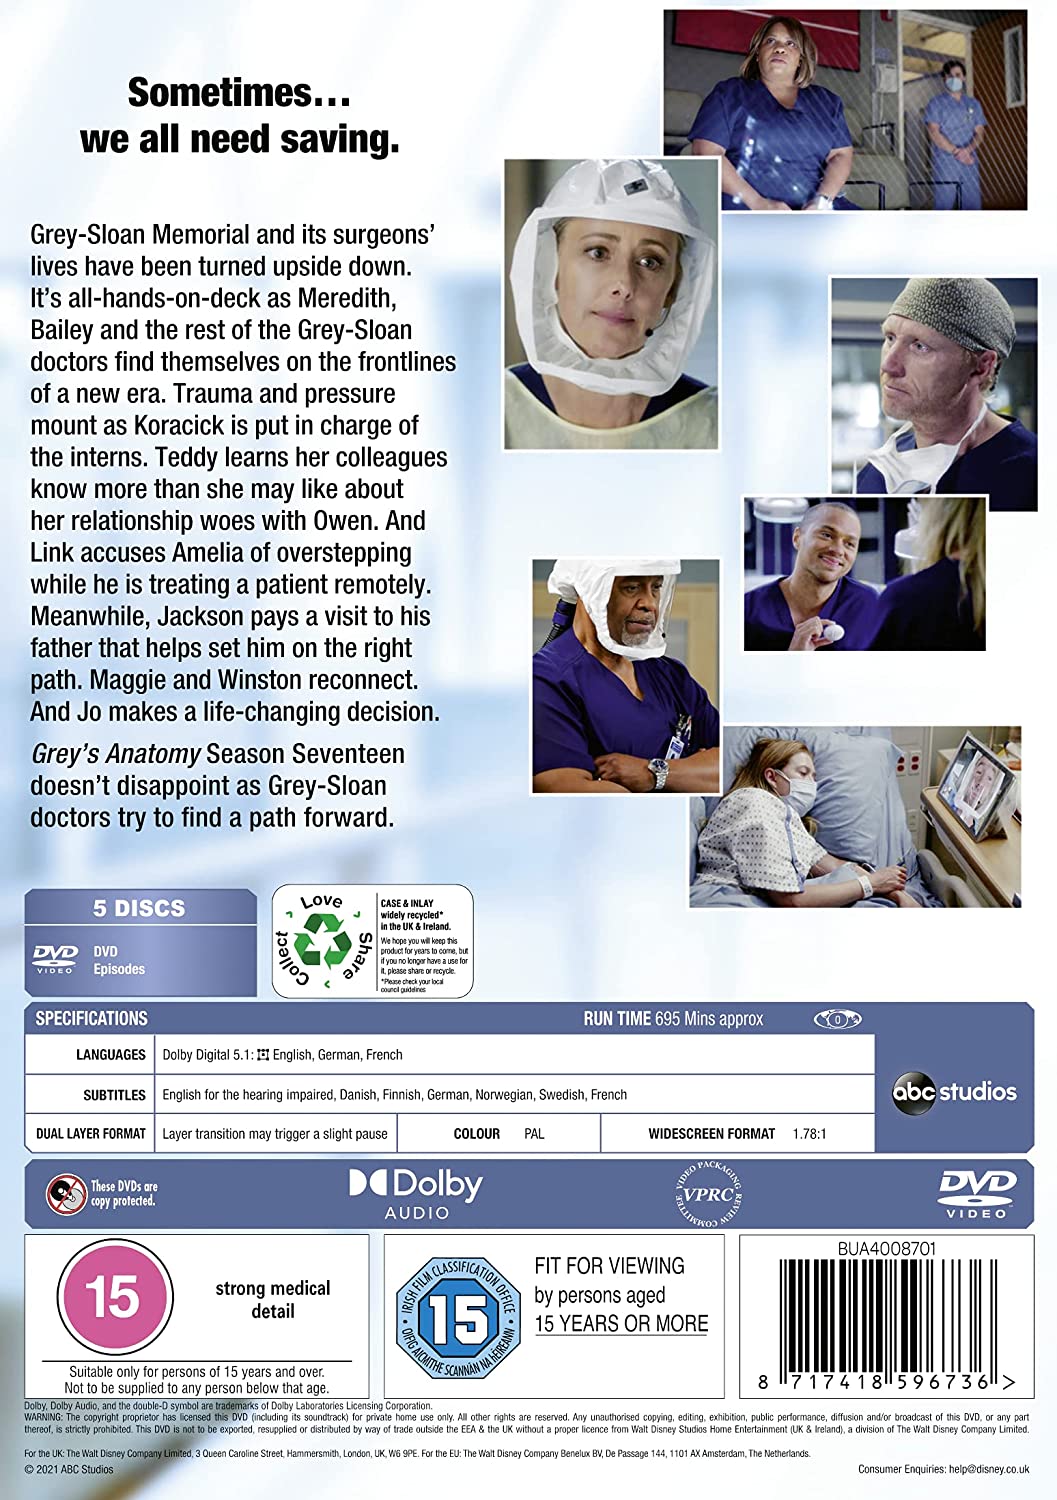 Grey's Anatomy Season 17 - Drama [DVD]